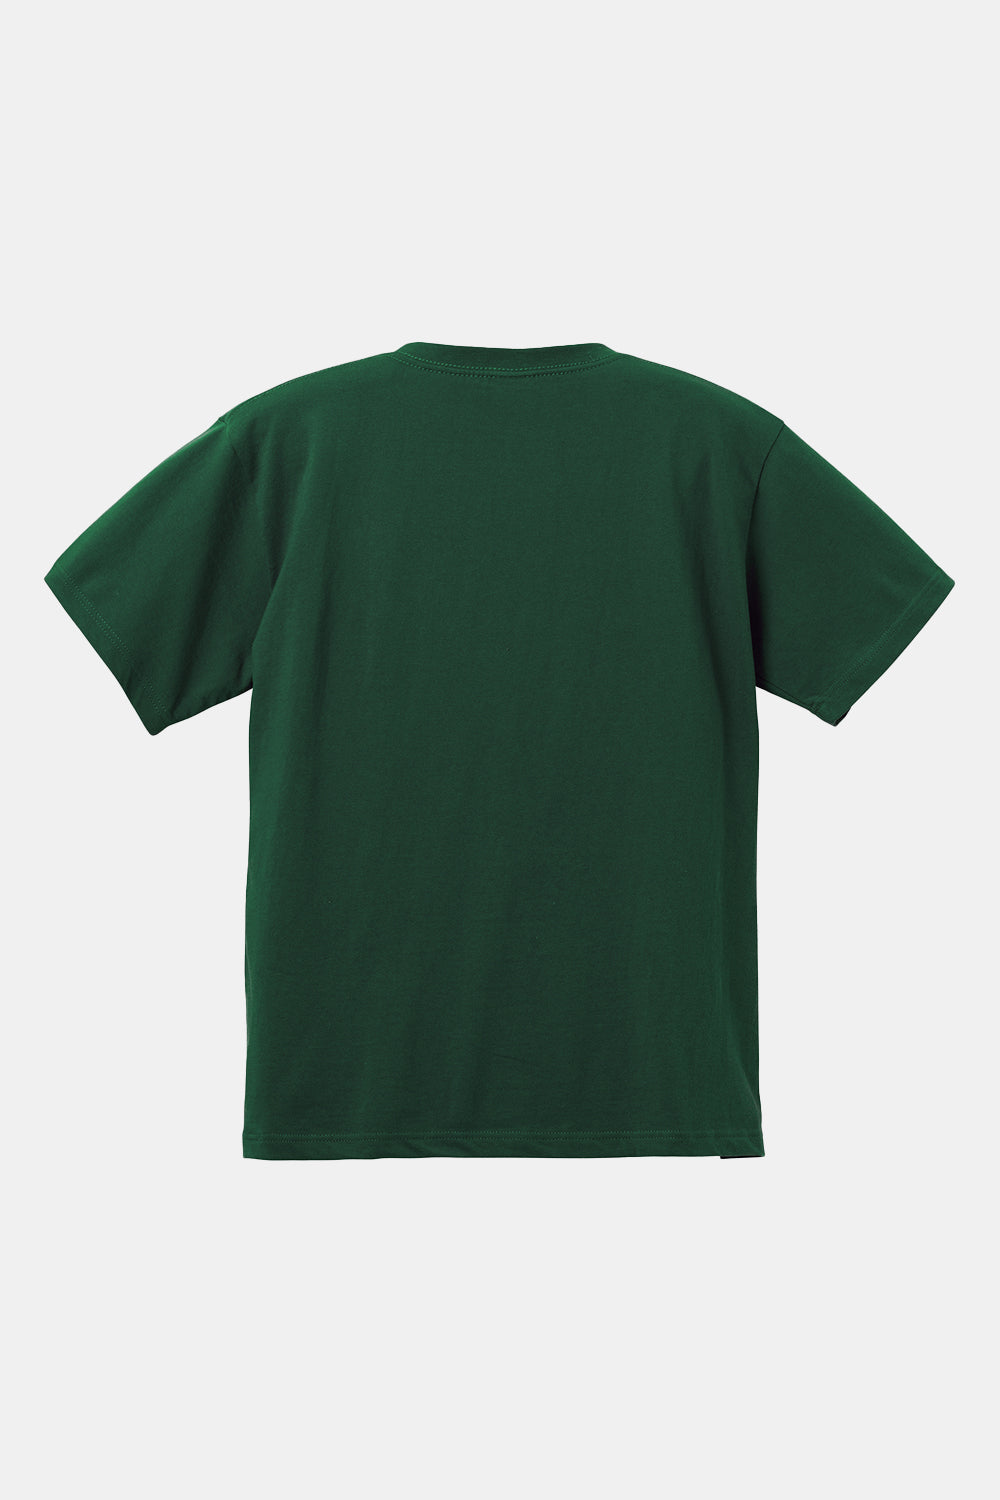 United Athle 5942 Classic Heavyweight 6.2oz T-shirt (Ivy Green)